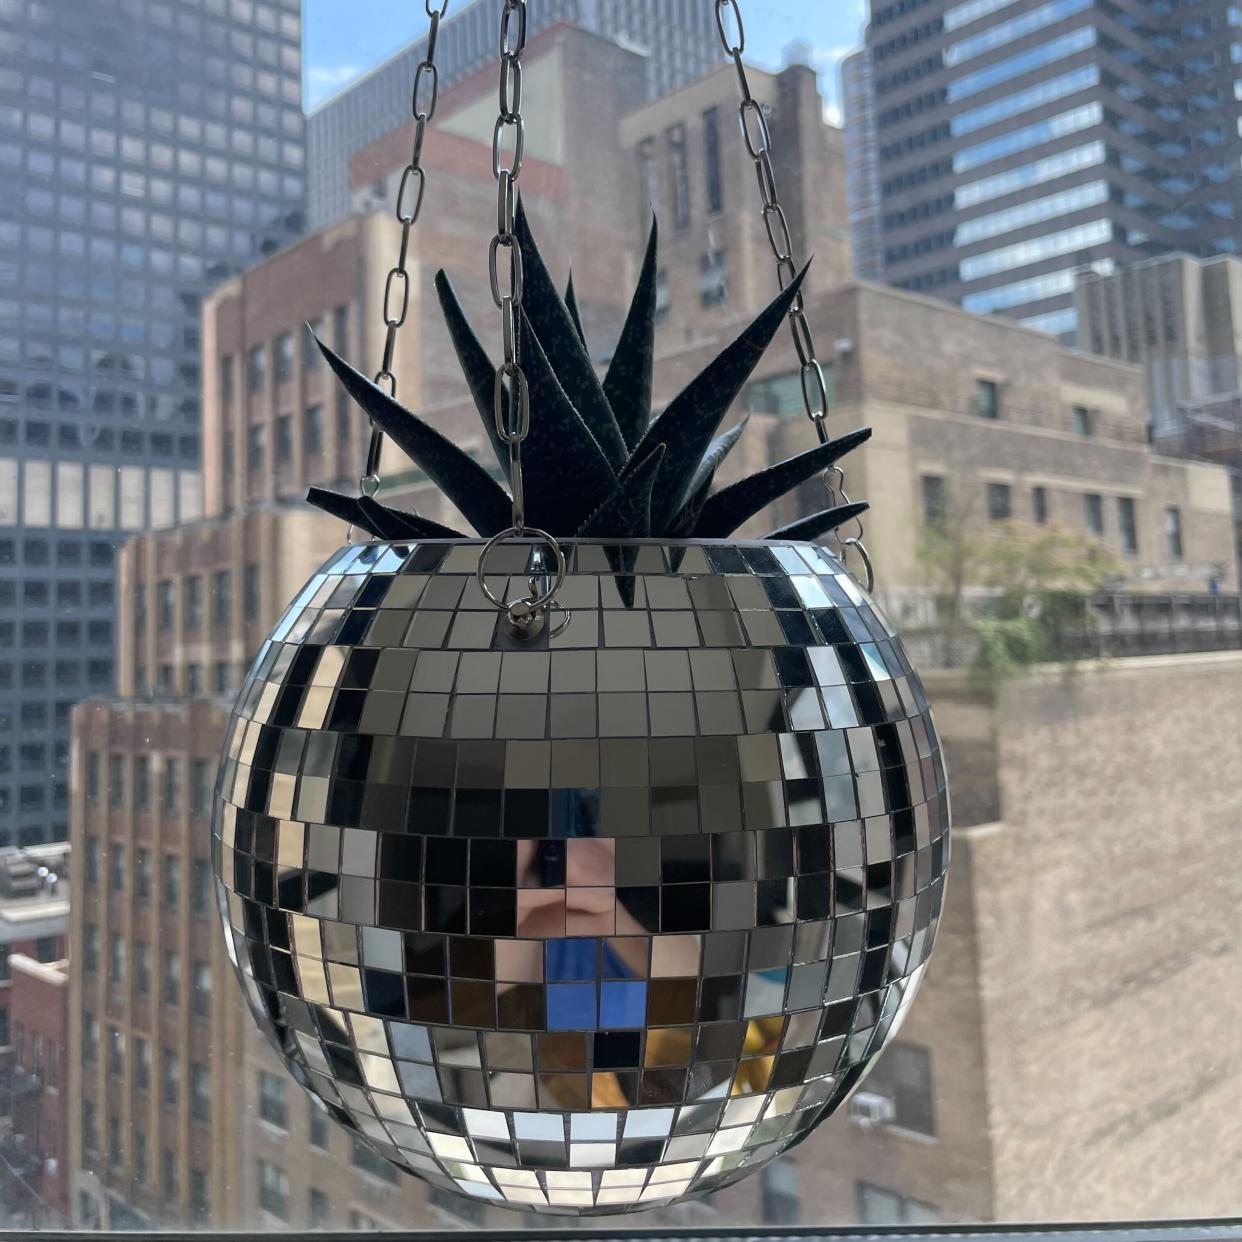 Zoe Malin hung a disco ball planter in her window.